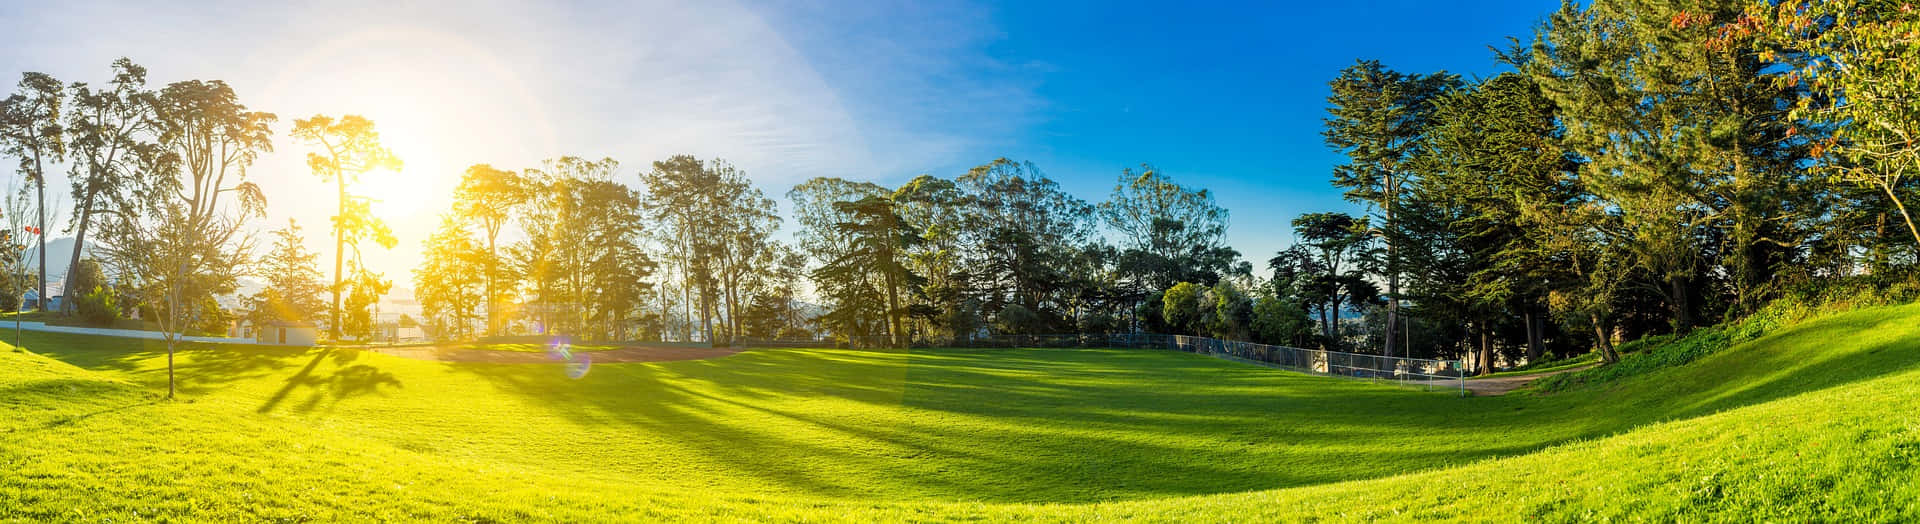 Panoramabildvom Golfplatz